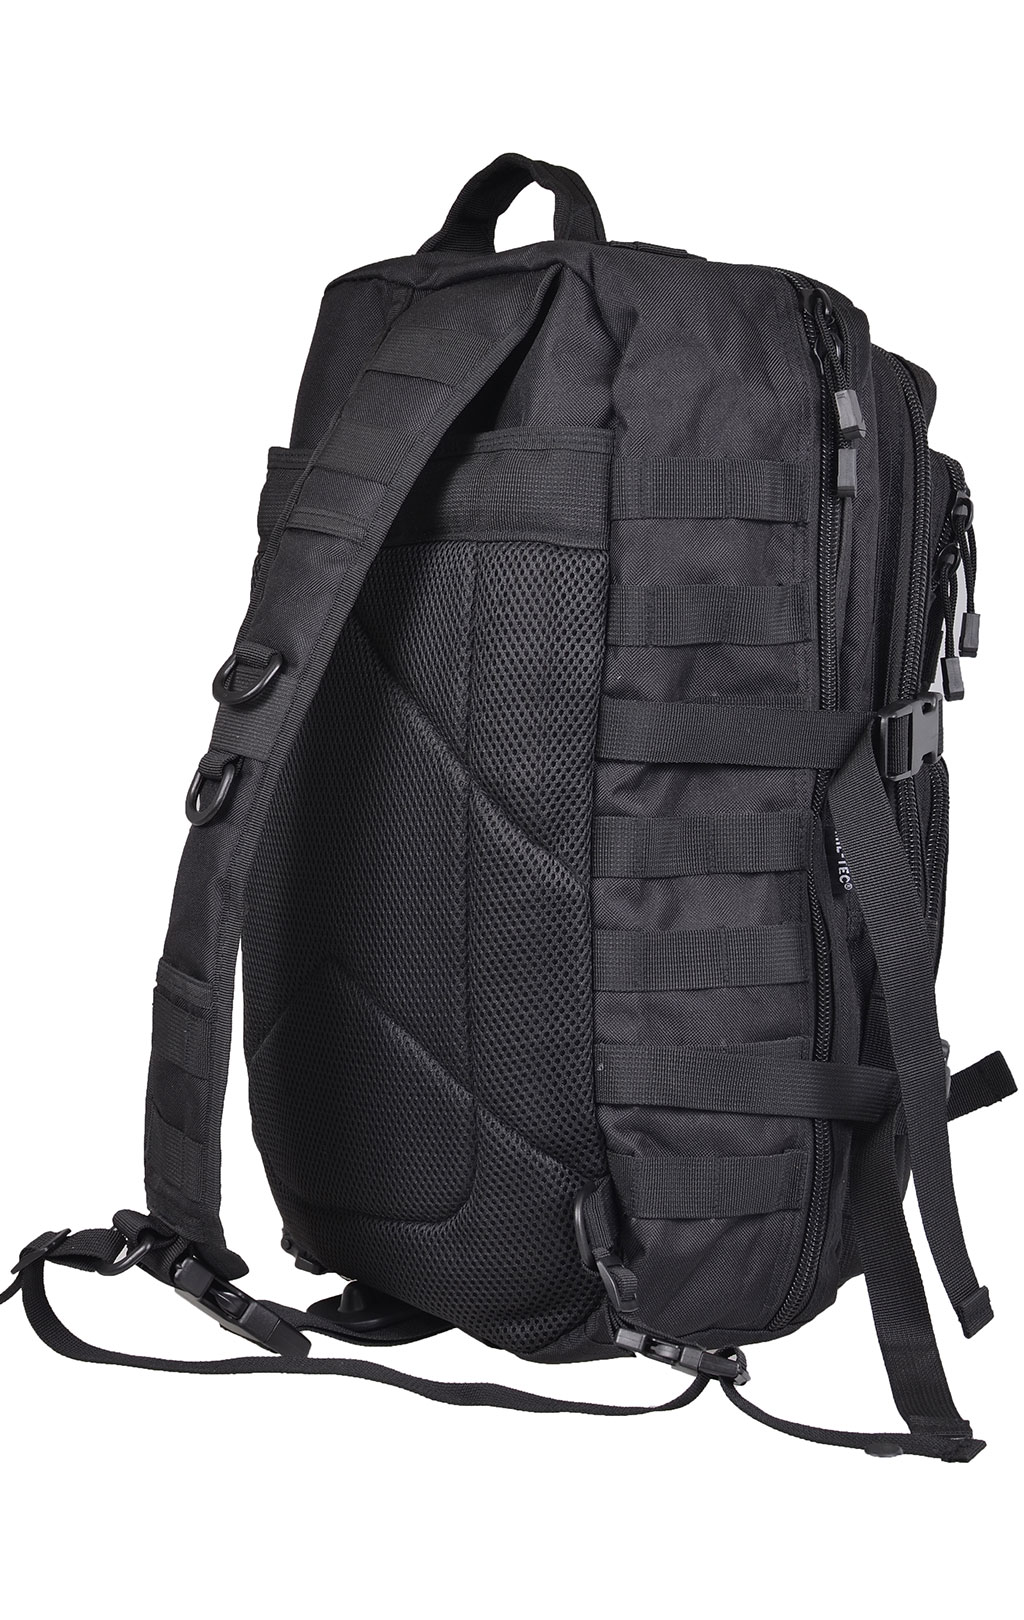 Рюкзак однолямочный ASSAULT one strap large (35L) black 